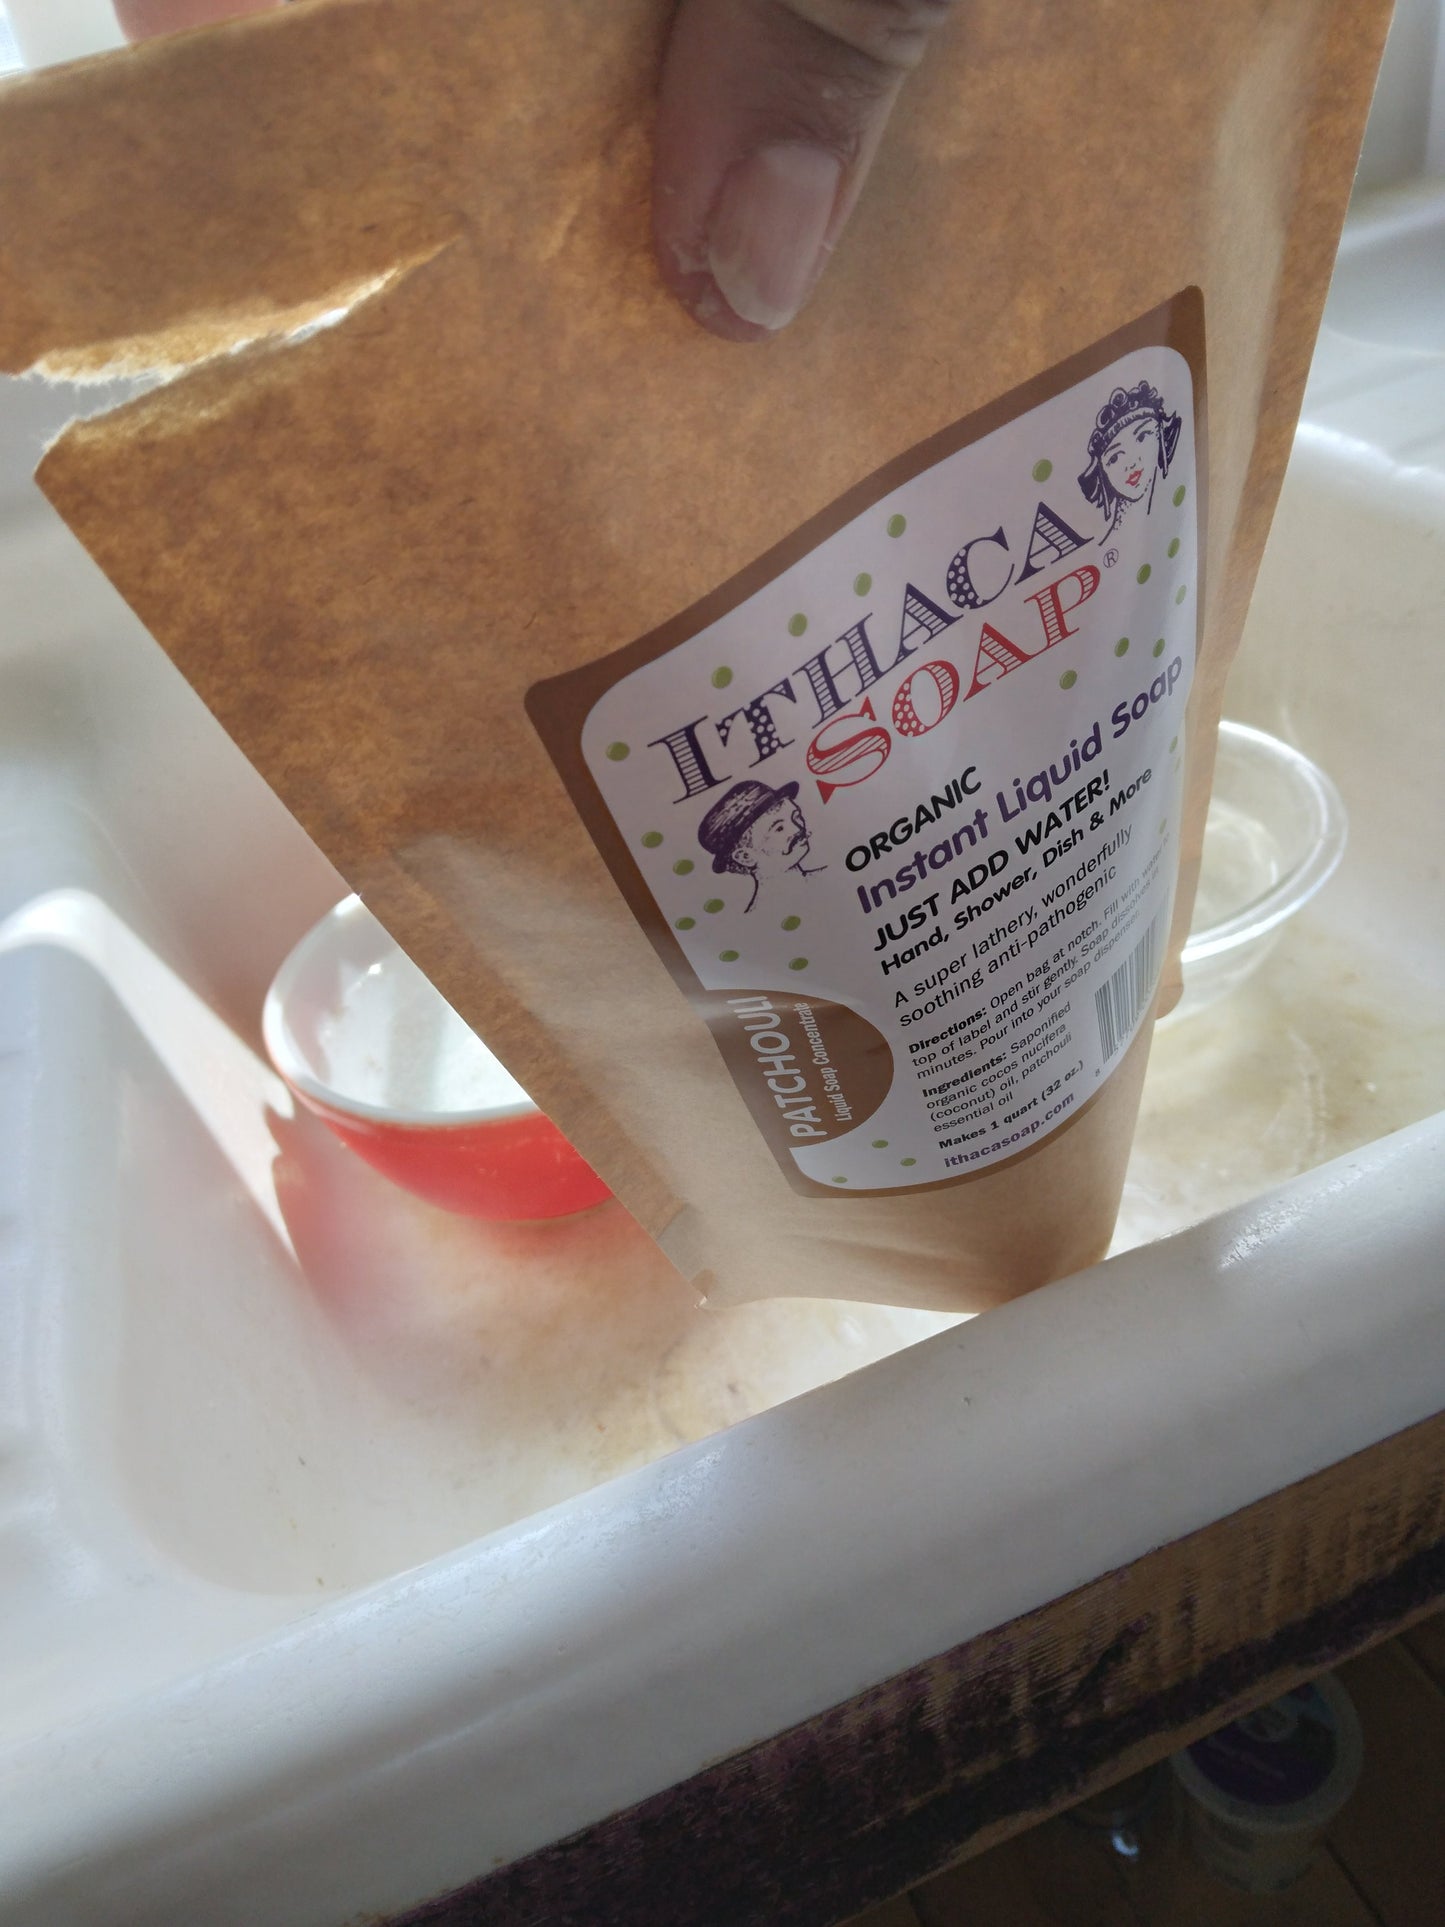 Instant Liquid Soap Refill Lemongrass